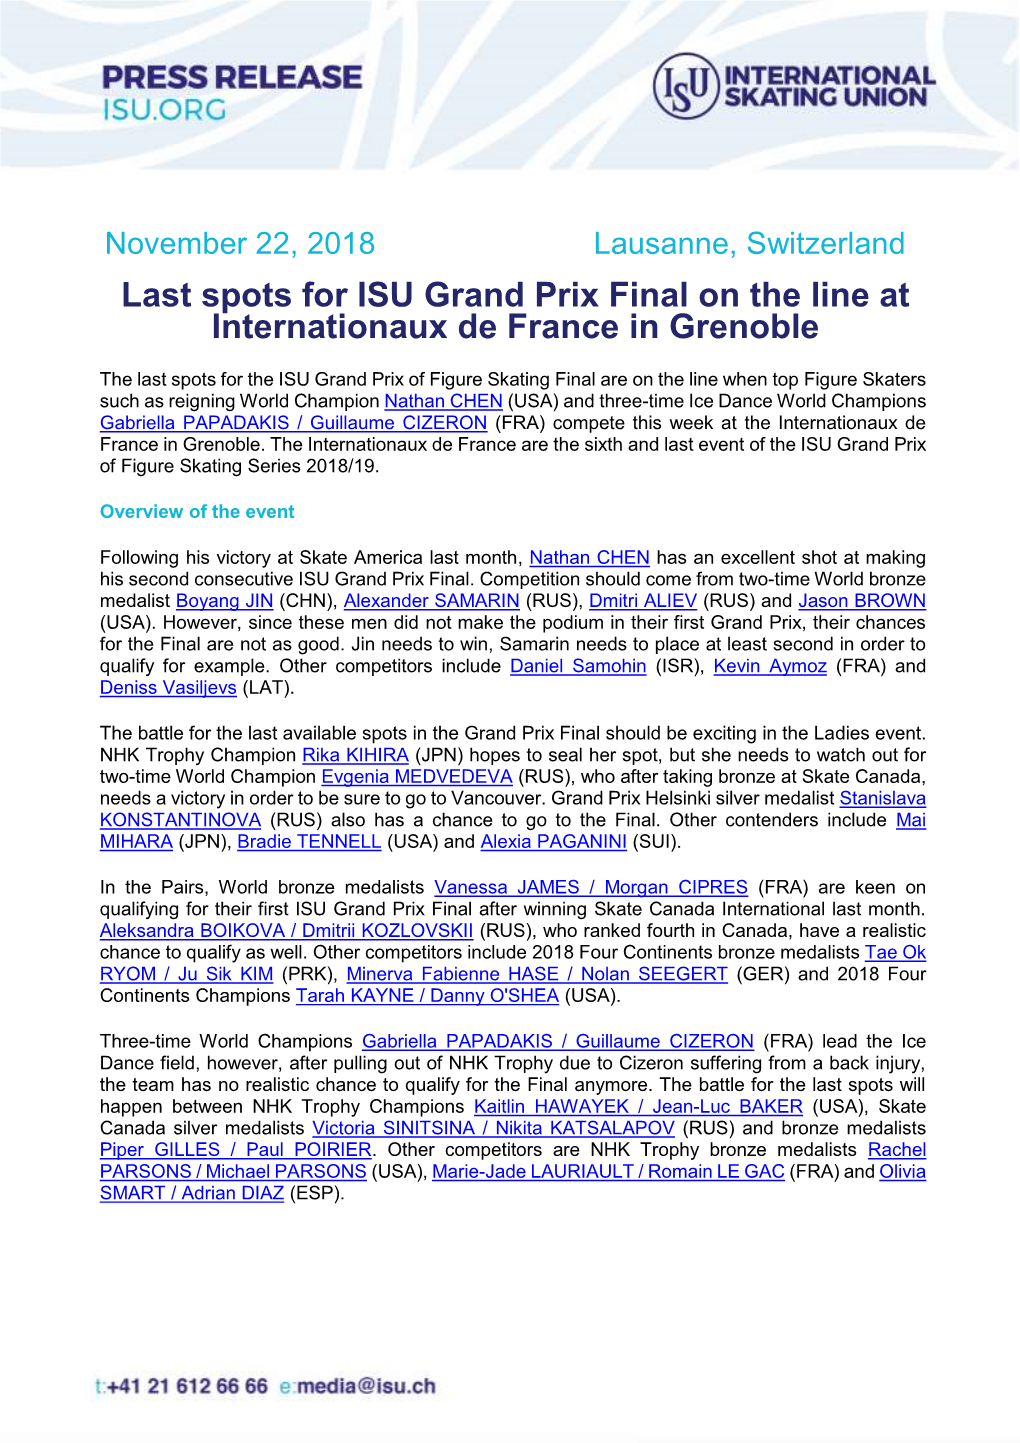 Last Spots for ISU Grand Prix Final on the Line at Internationaux De France in Grenoble